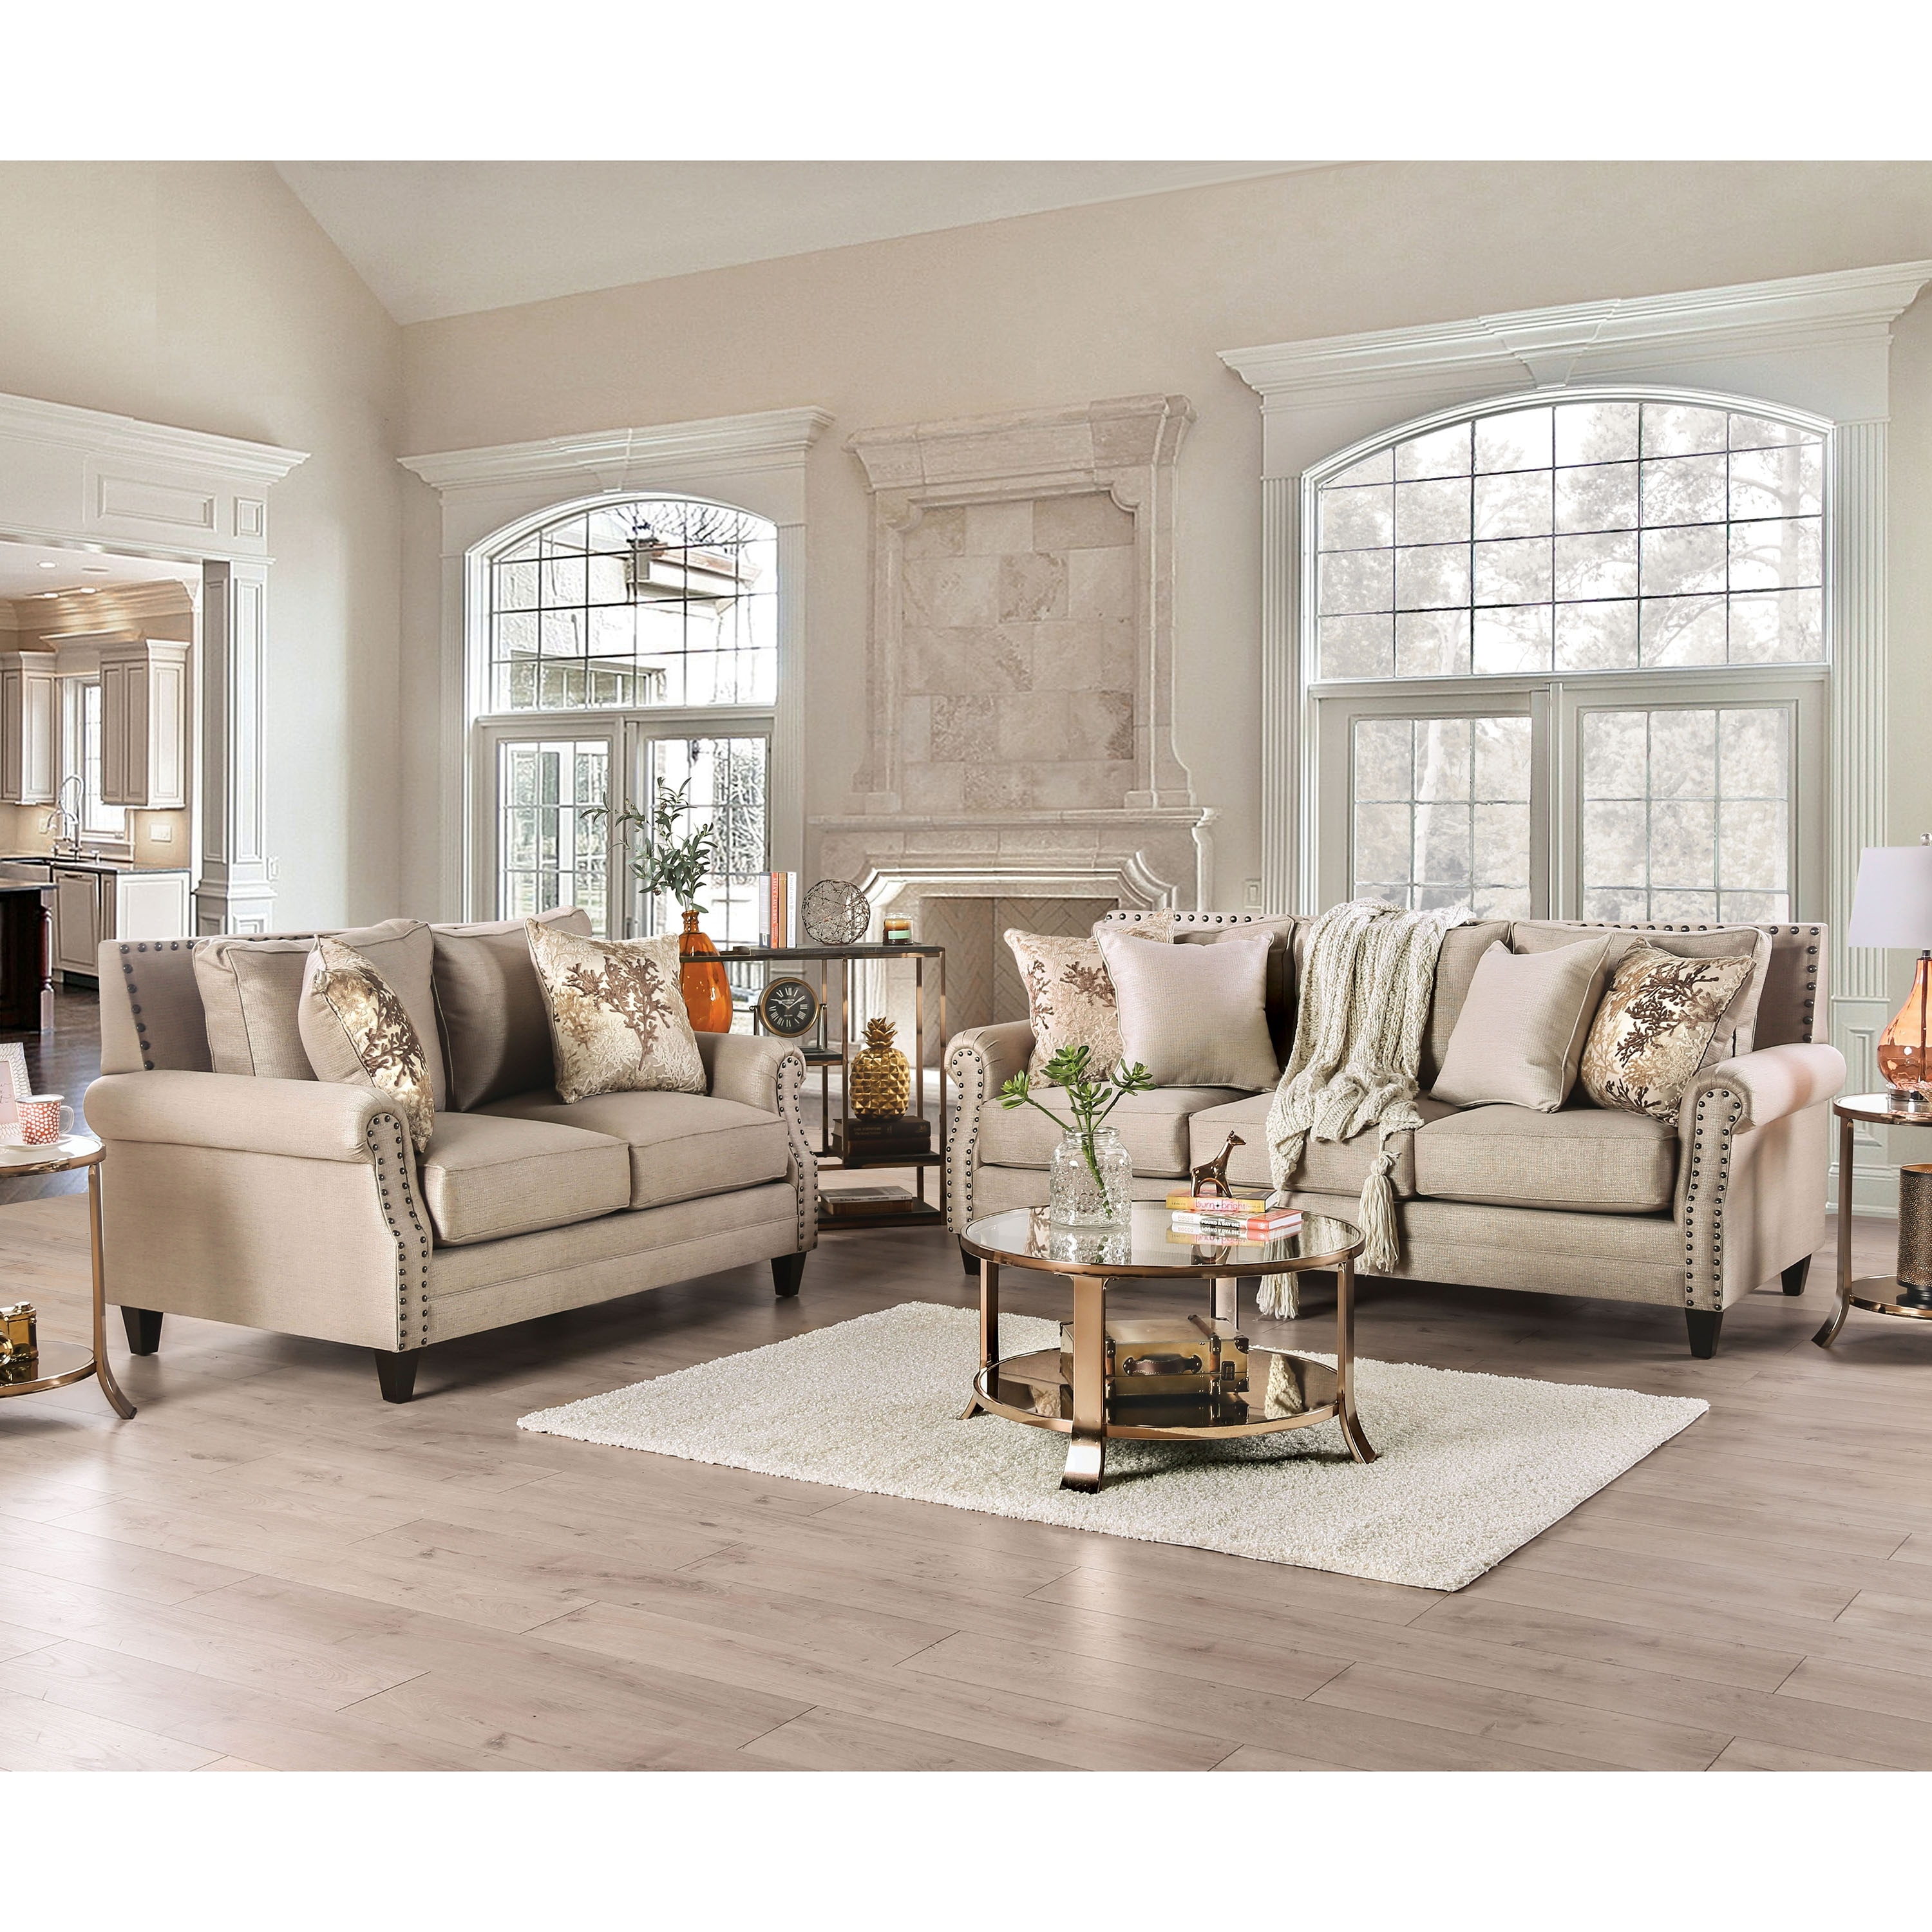 Furniture Of America Qyn Transitional Beige 2 Piece Living Room Set Overstock 31470855